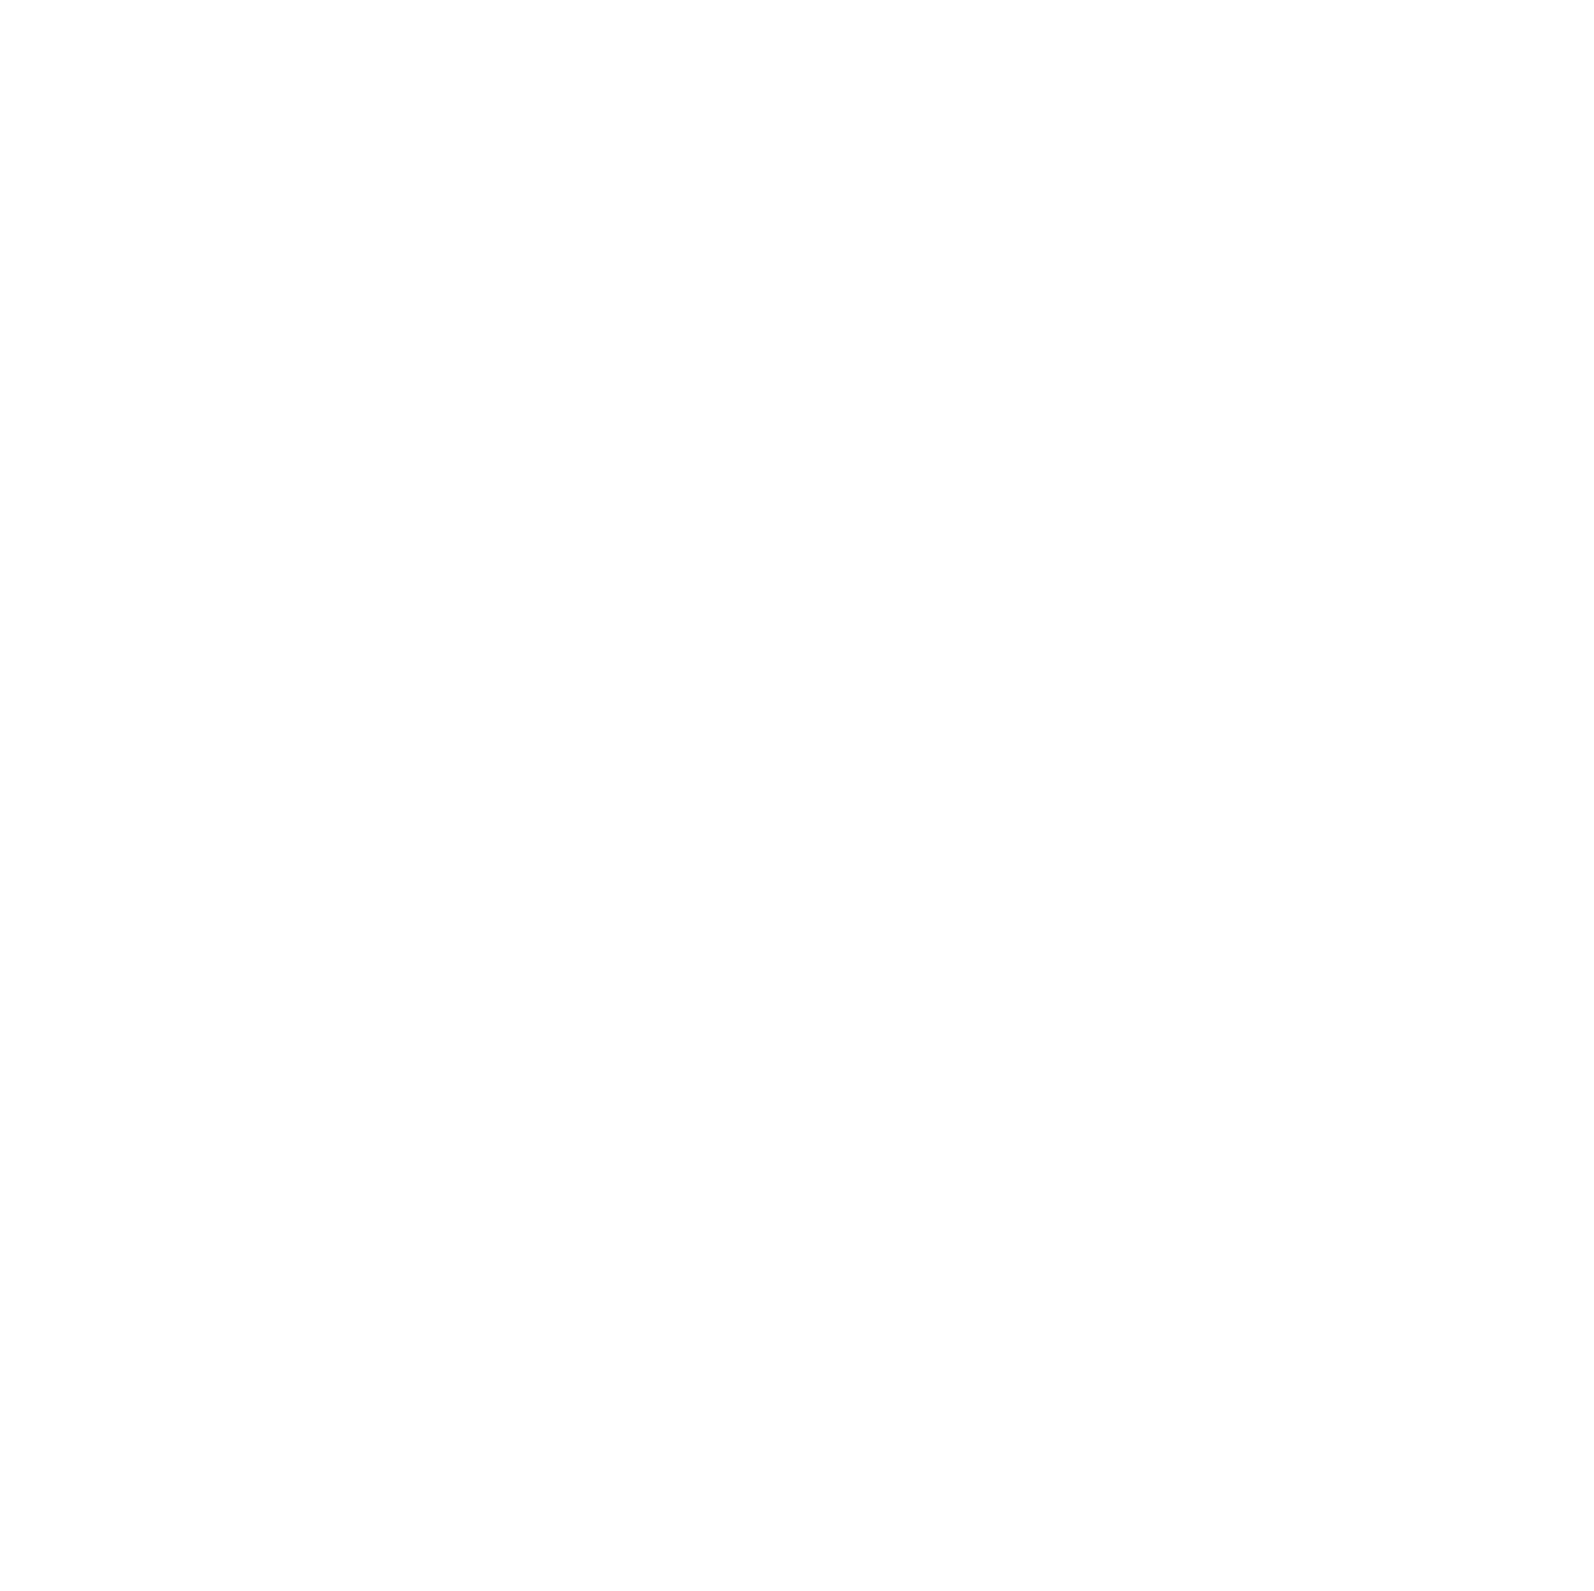 Gevo logo pour fonds sombres (PNG transparent)